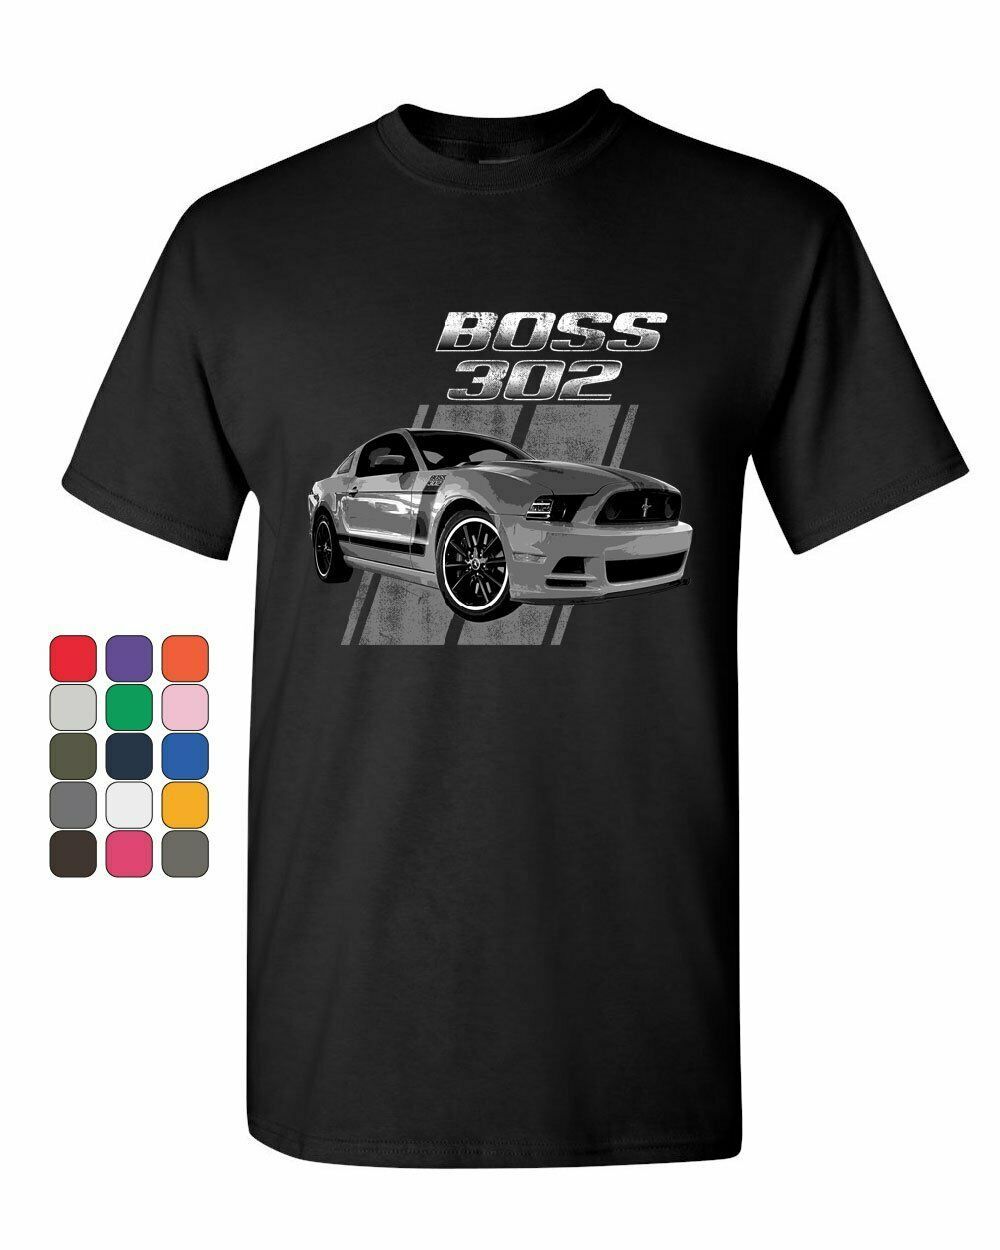 Ford Mustang Boss 302 T-Shirt 50 Years Anniversary Muscle Car Mens Tee Shirt